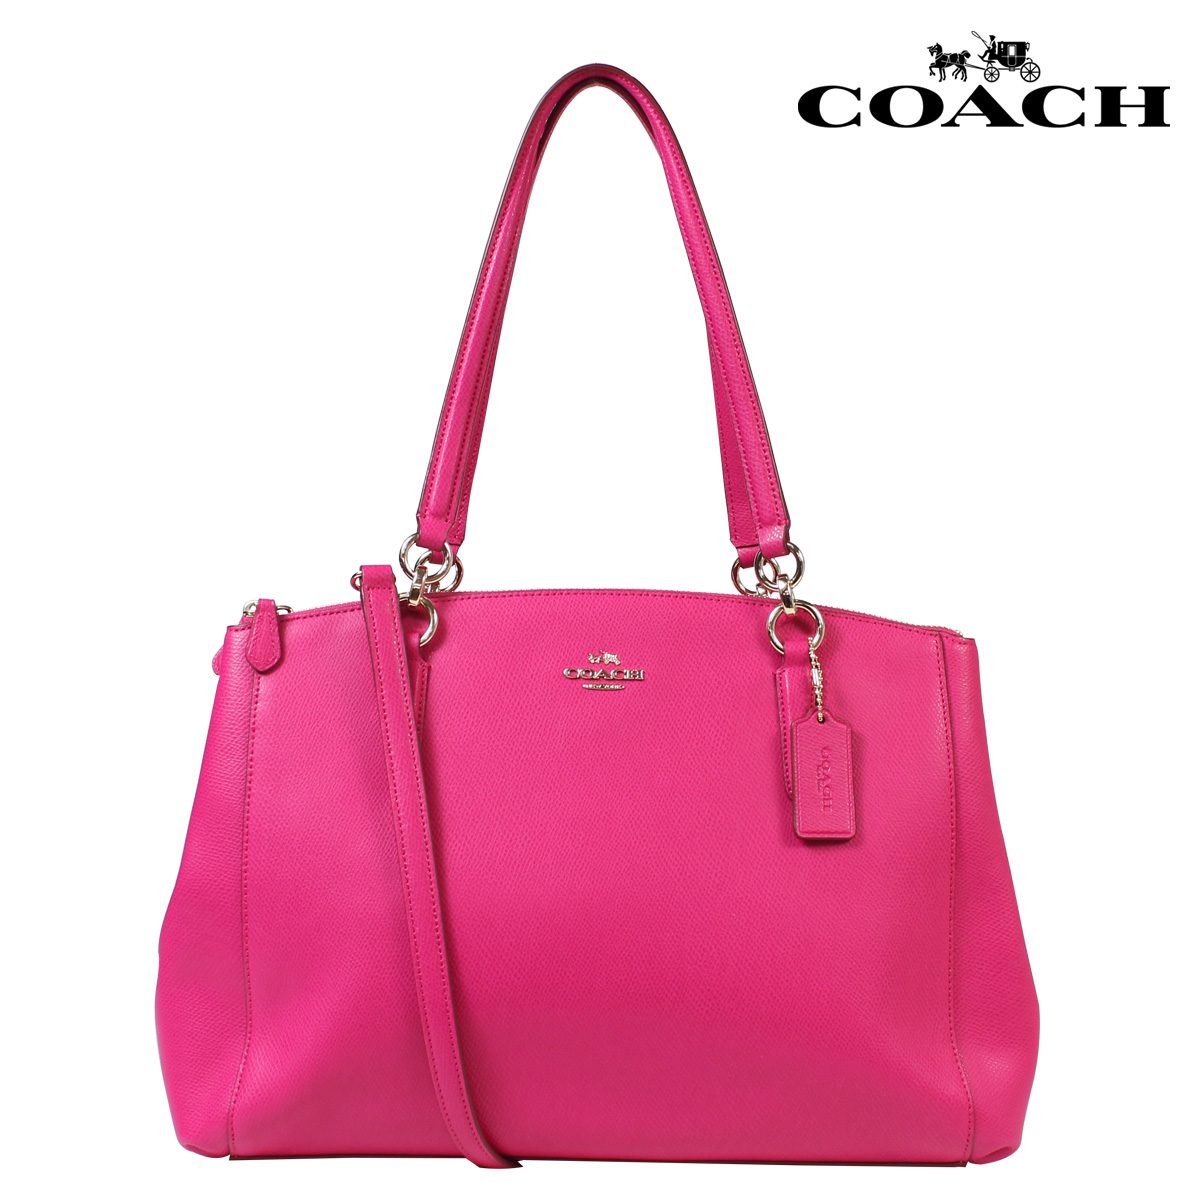 ALLSPORTS: Coach COACH bag tote bag 2-WAY F-36606 ladies pink Ruby | Rakuten Global Market